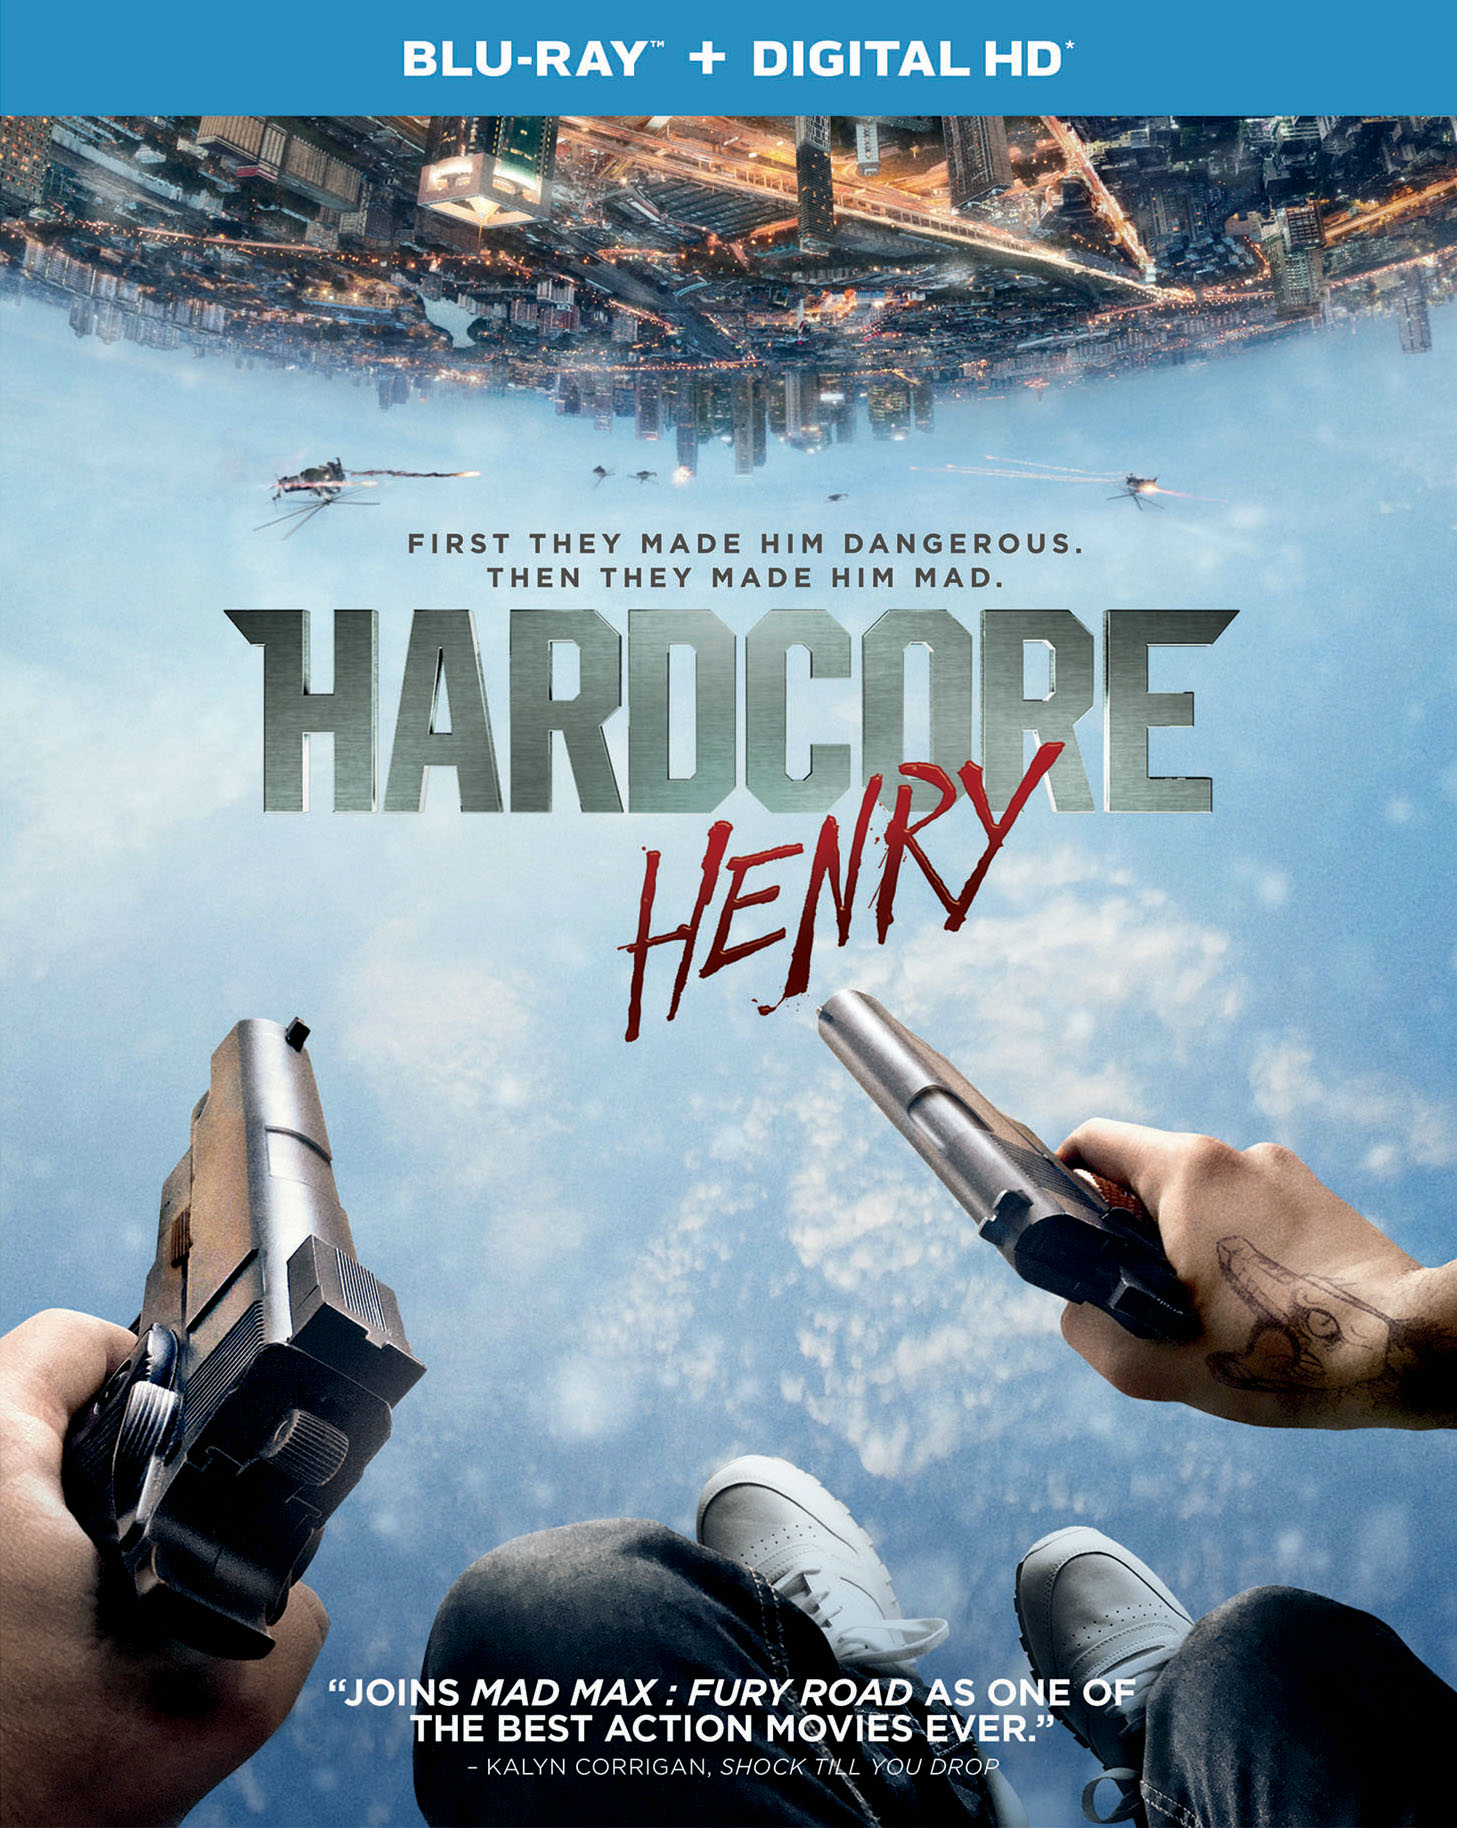 Hardcore Henry (Blu-ray + Digital HD) - Blu-ray [ 2016 ]  - Sci Fi Movies On Blu-ray - Movies On GRUV